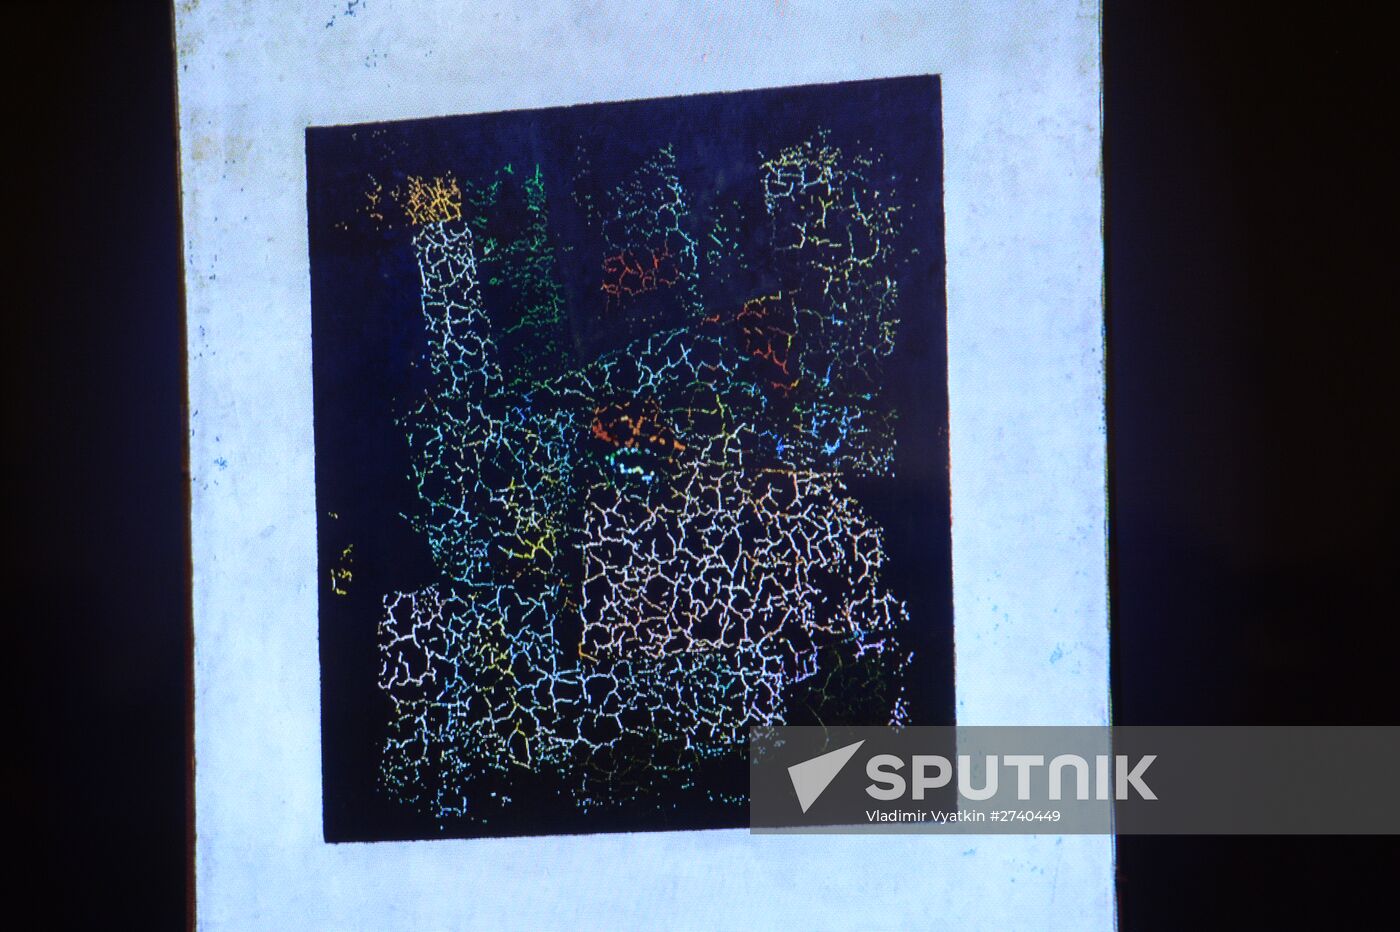 Researchers find color image hidden beneath Malevich's "Black Square"